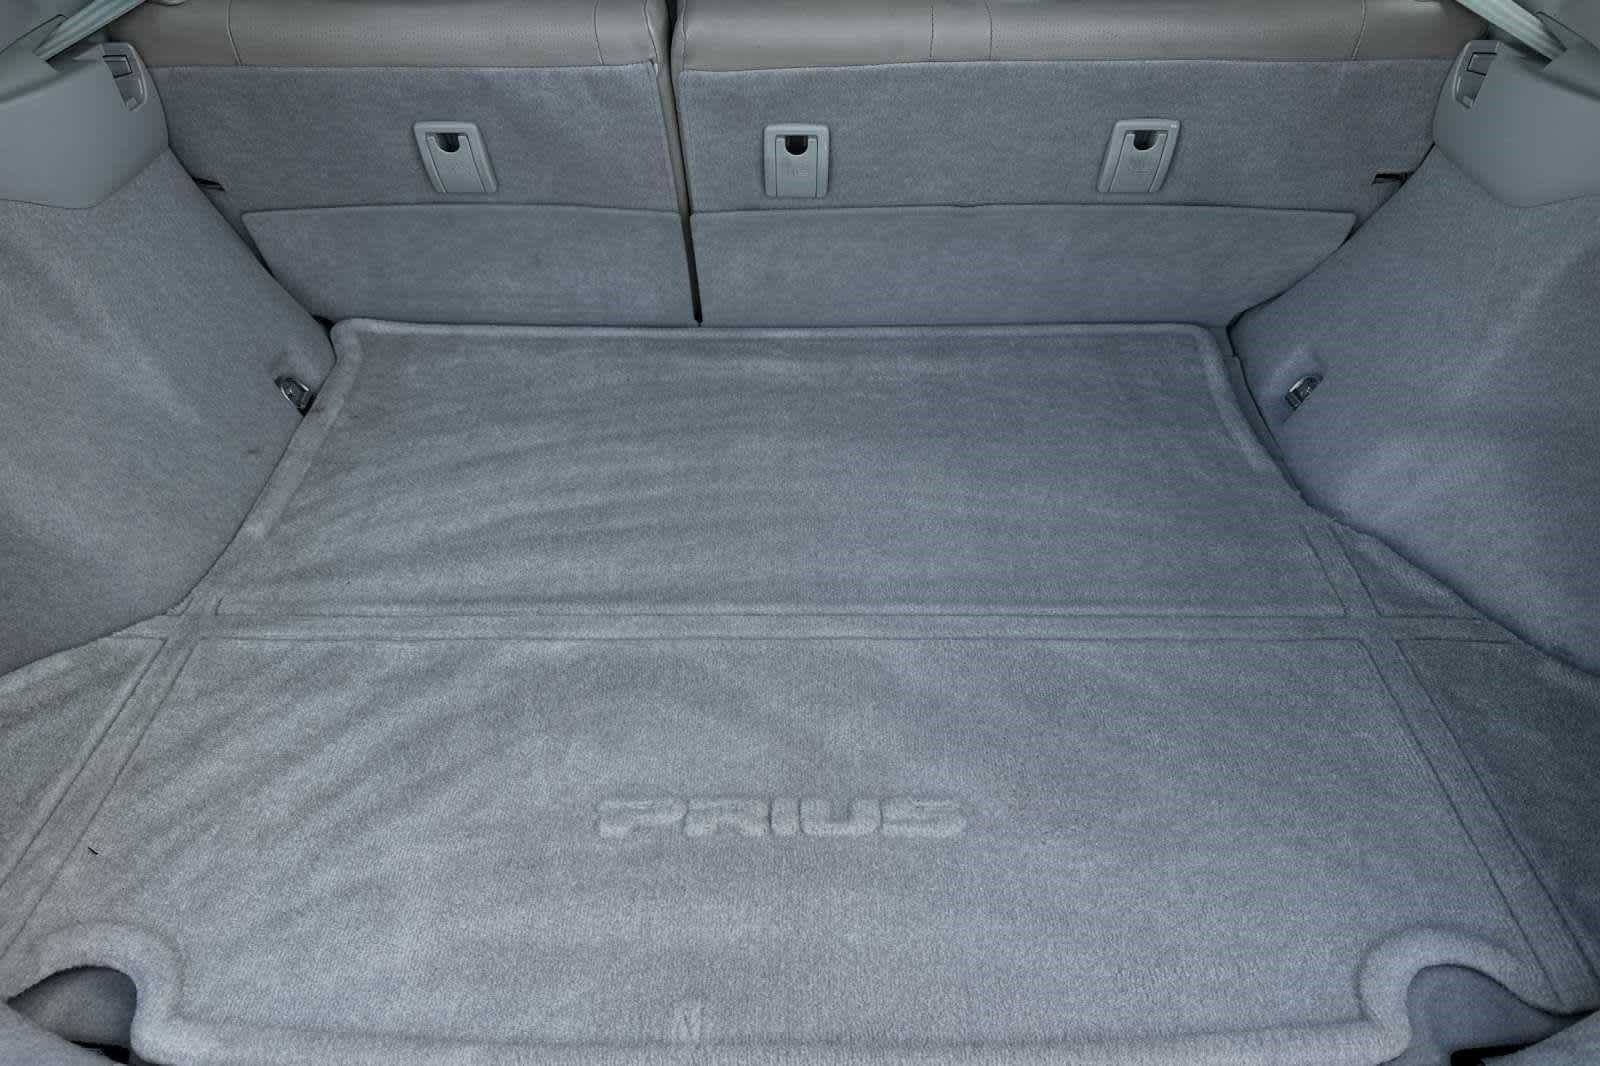 2011 Toyota Prius IV